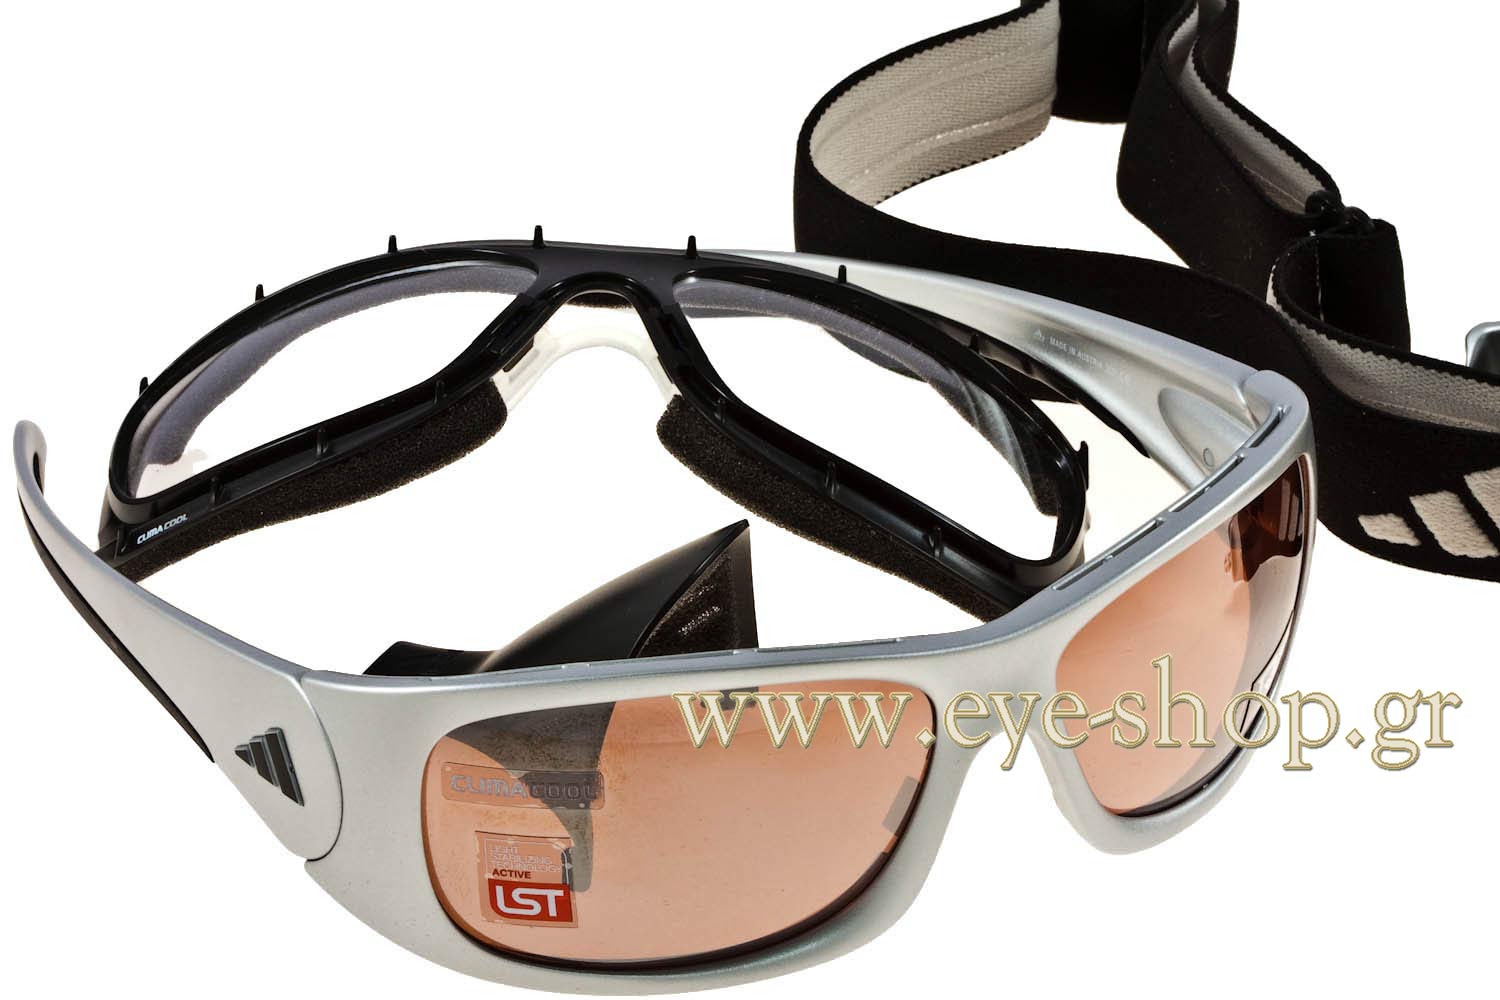 Excursión Deshabilitar acortar thomas-huber-wearing-sunglasses-adidas-terrex-pro-a143 wearing Adidas  sunglasses at EyeShop